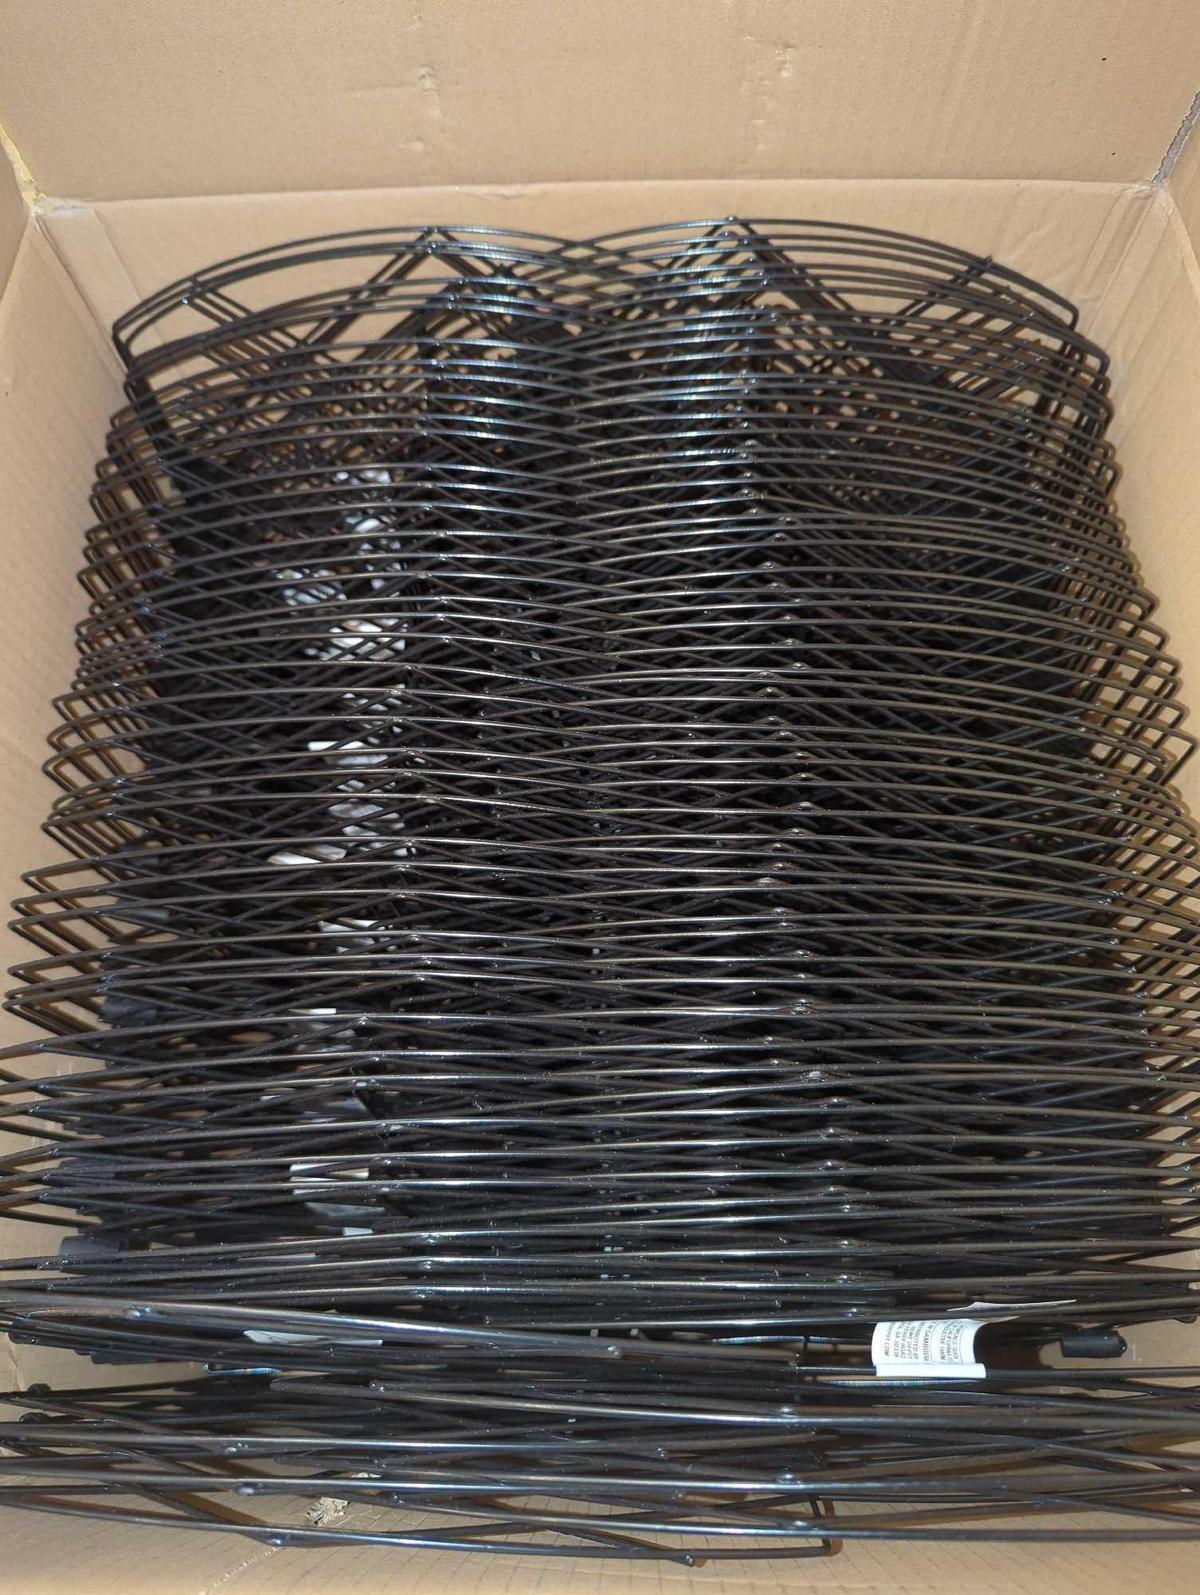 Box of 15 Vigoro 10 Foot Lattice Black Folding Metal Garden Fence, Model 51464, Retail Price